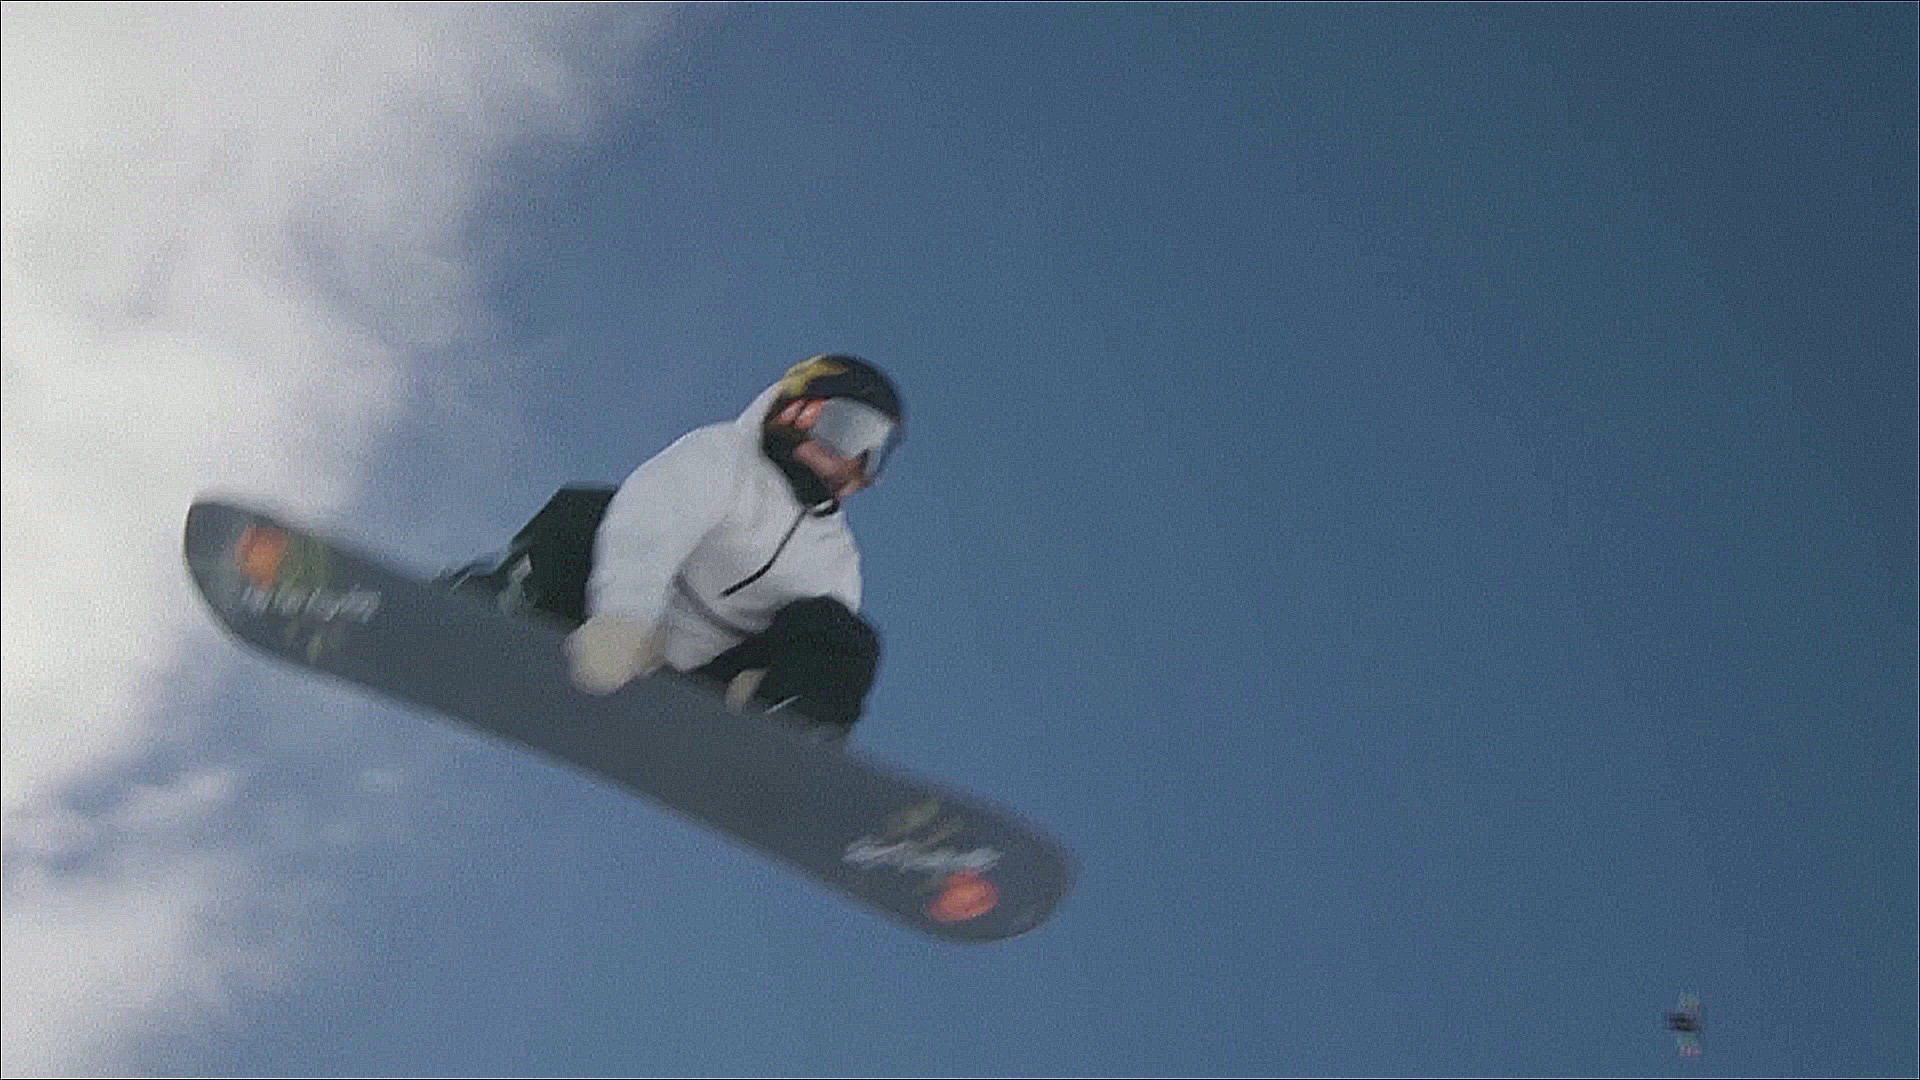 Японка и канадка установили рекорд по тройному прыжку на сноуборде